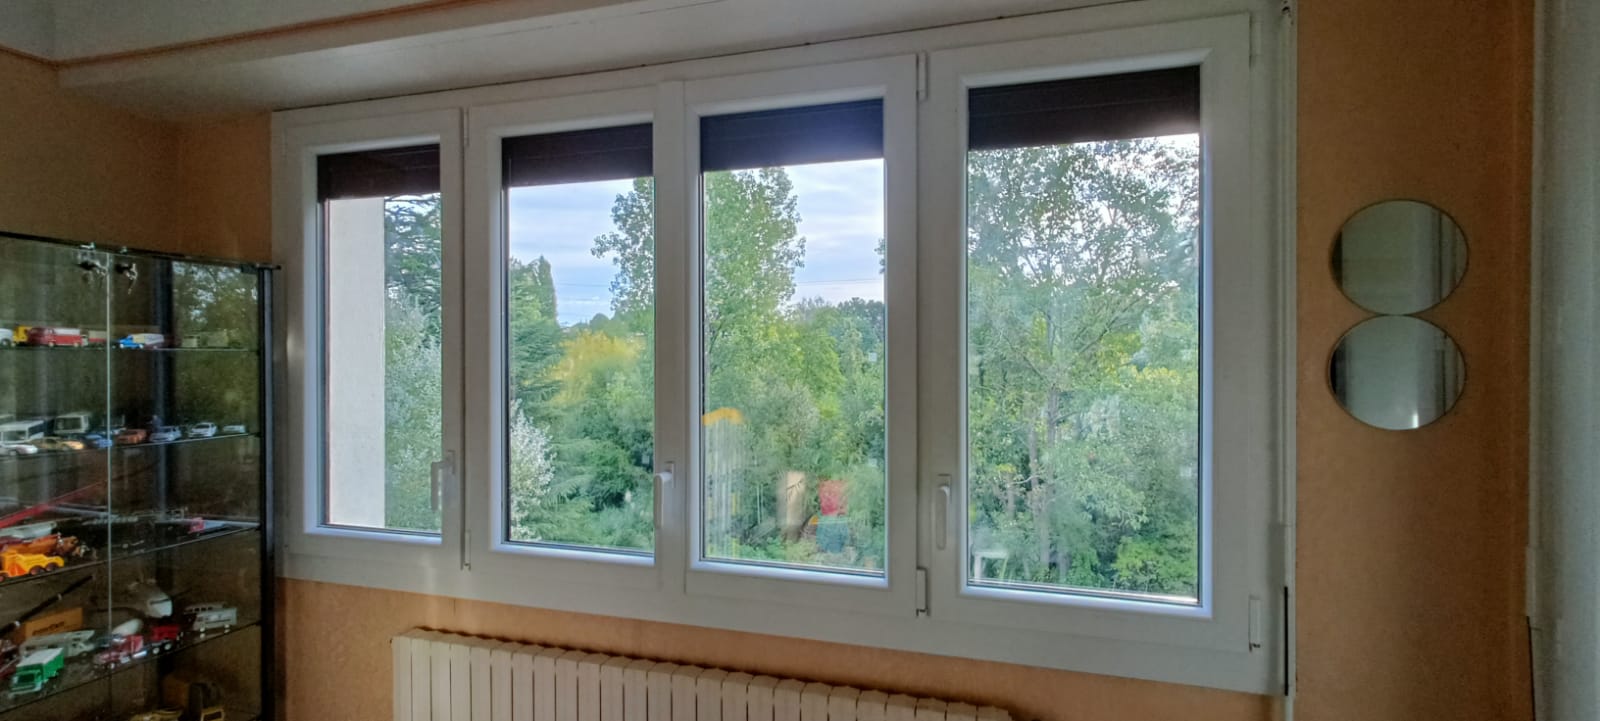 Installation fenêtres PVC sur mesure Bayonne